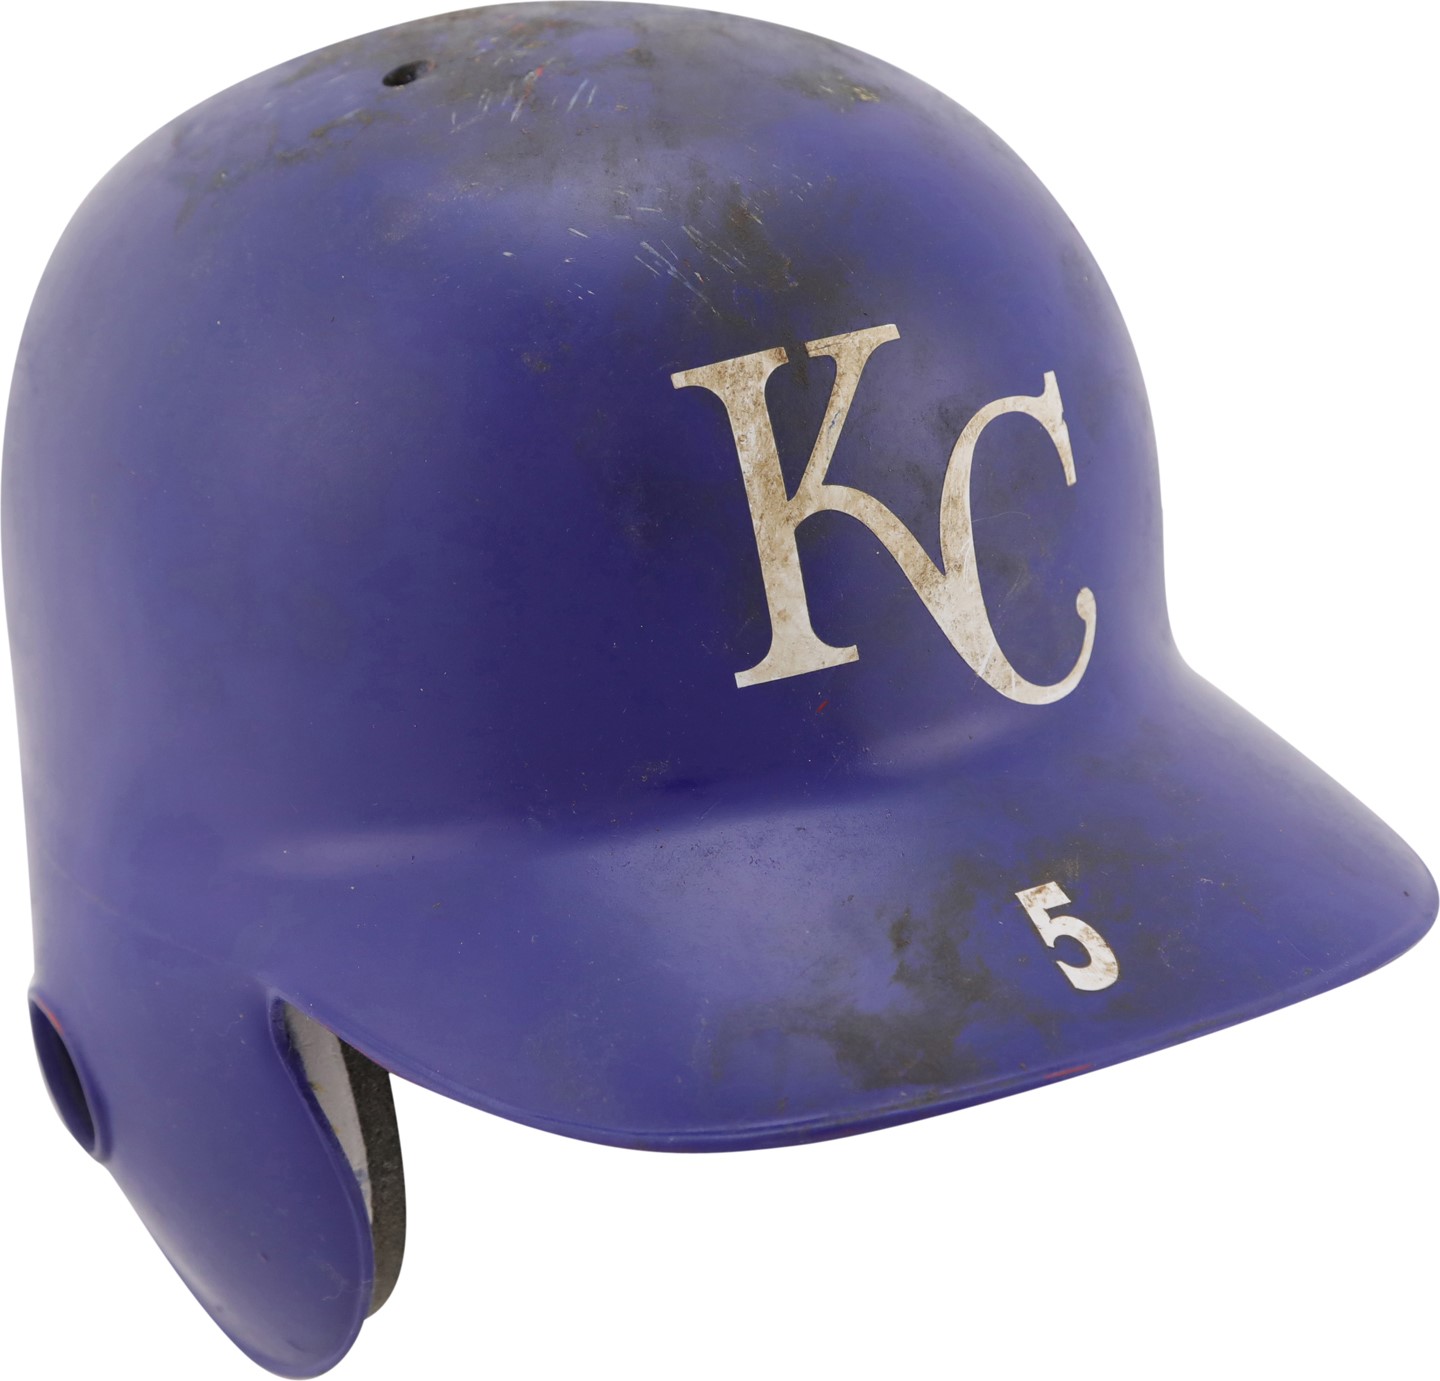 Baseball Equipment - Circa 1990 George Brett Kansas City Royals Game Worn Helmet